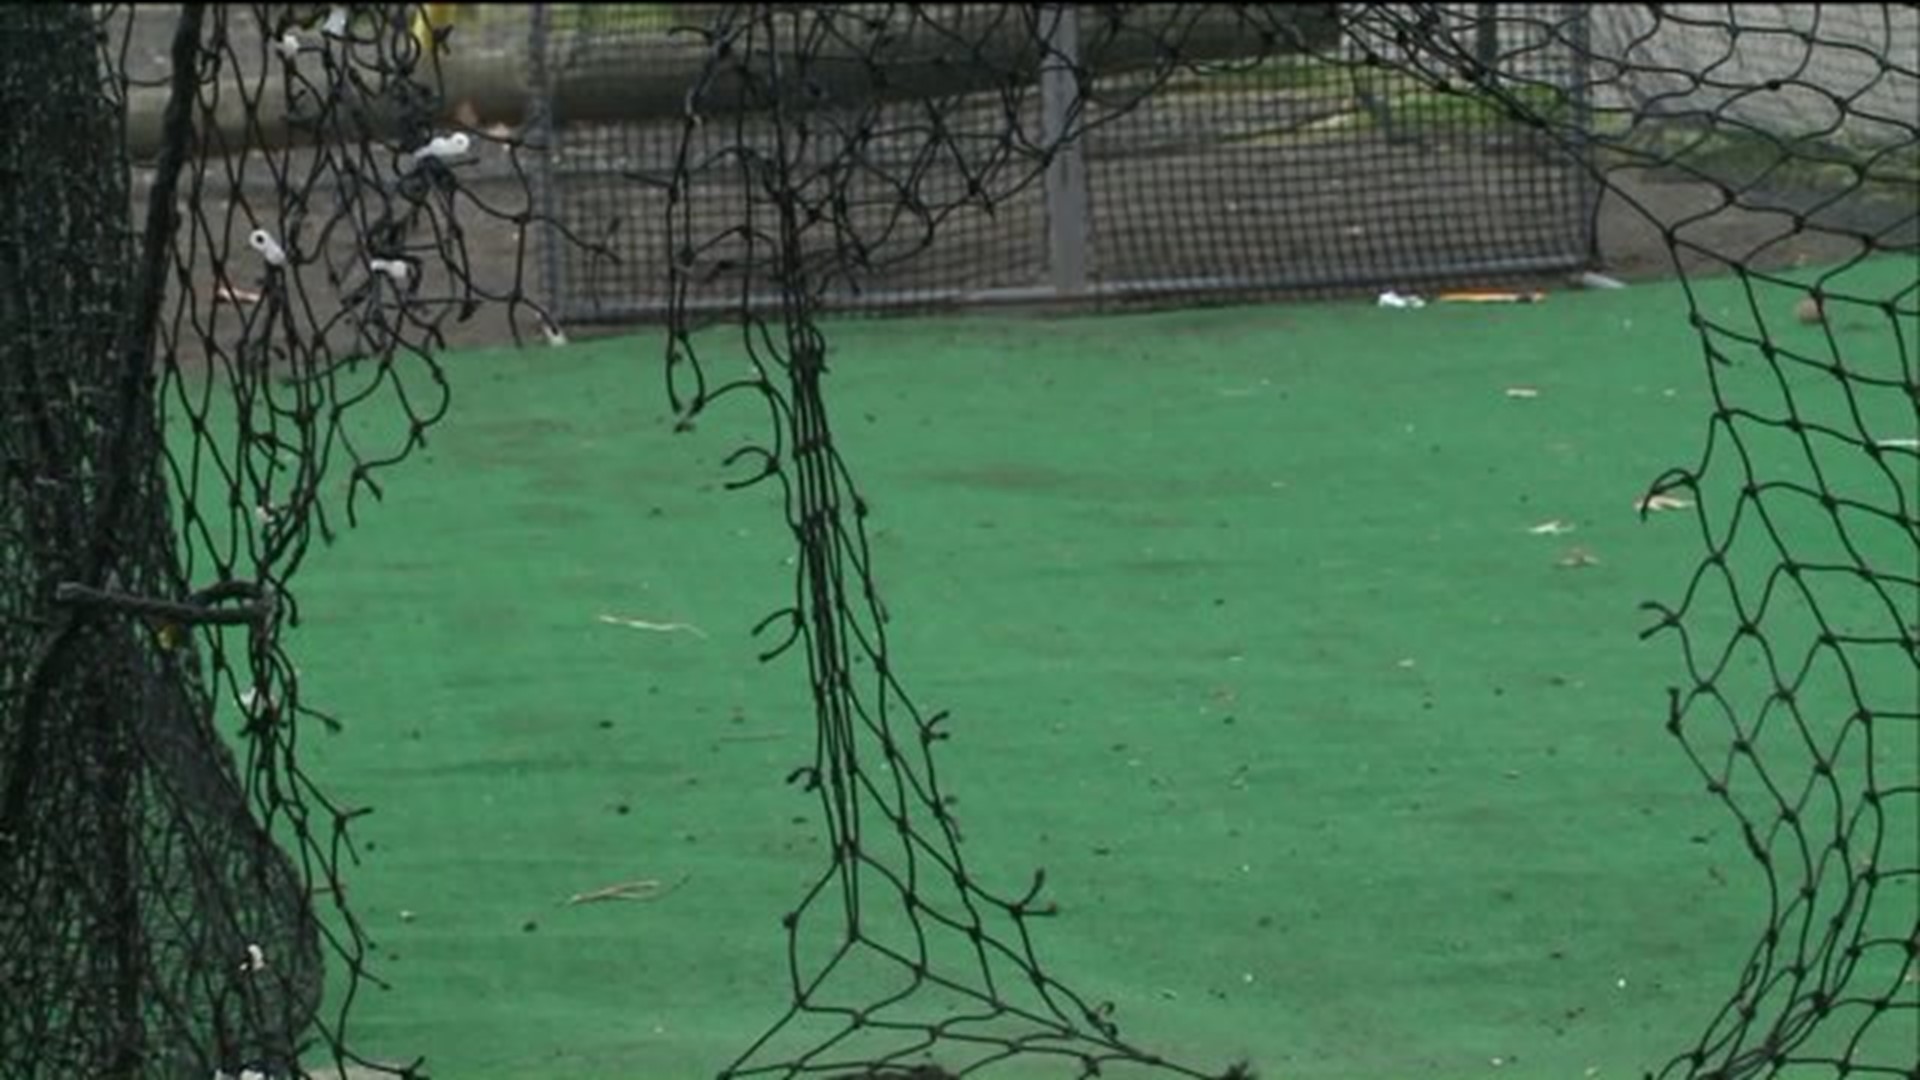 Branford baseball field vandalized